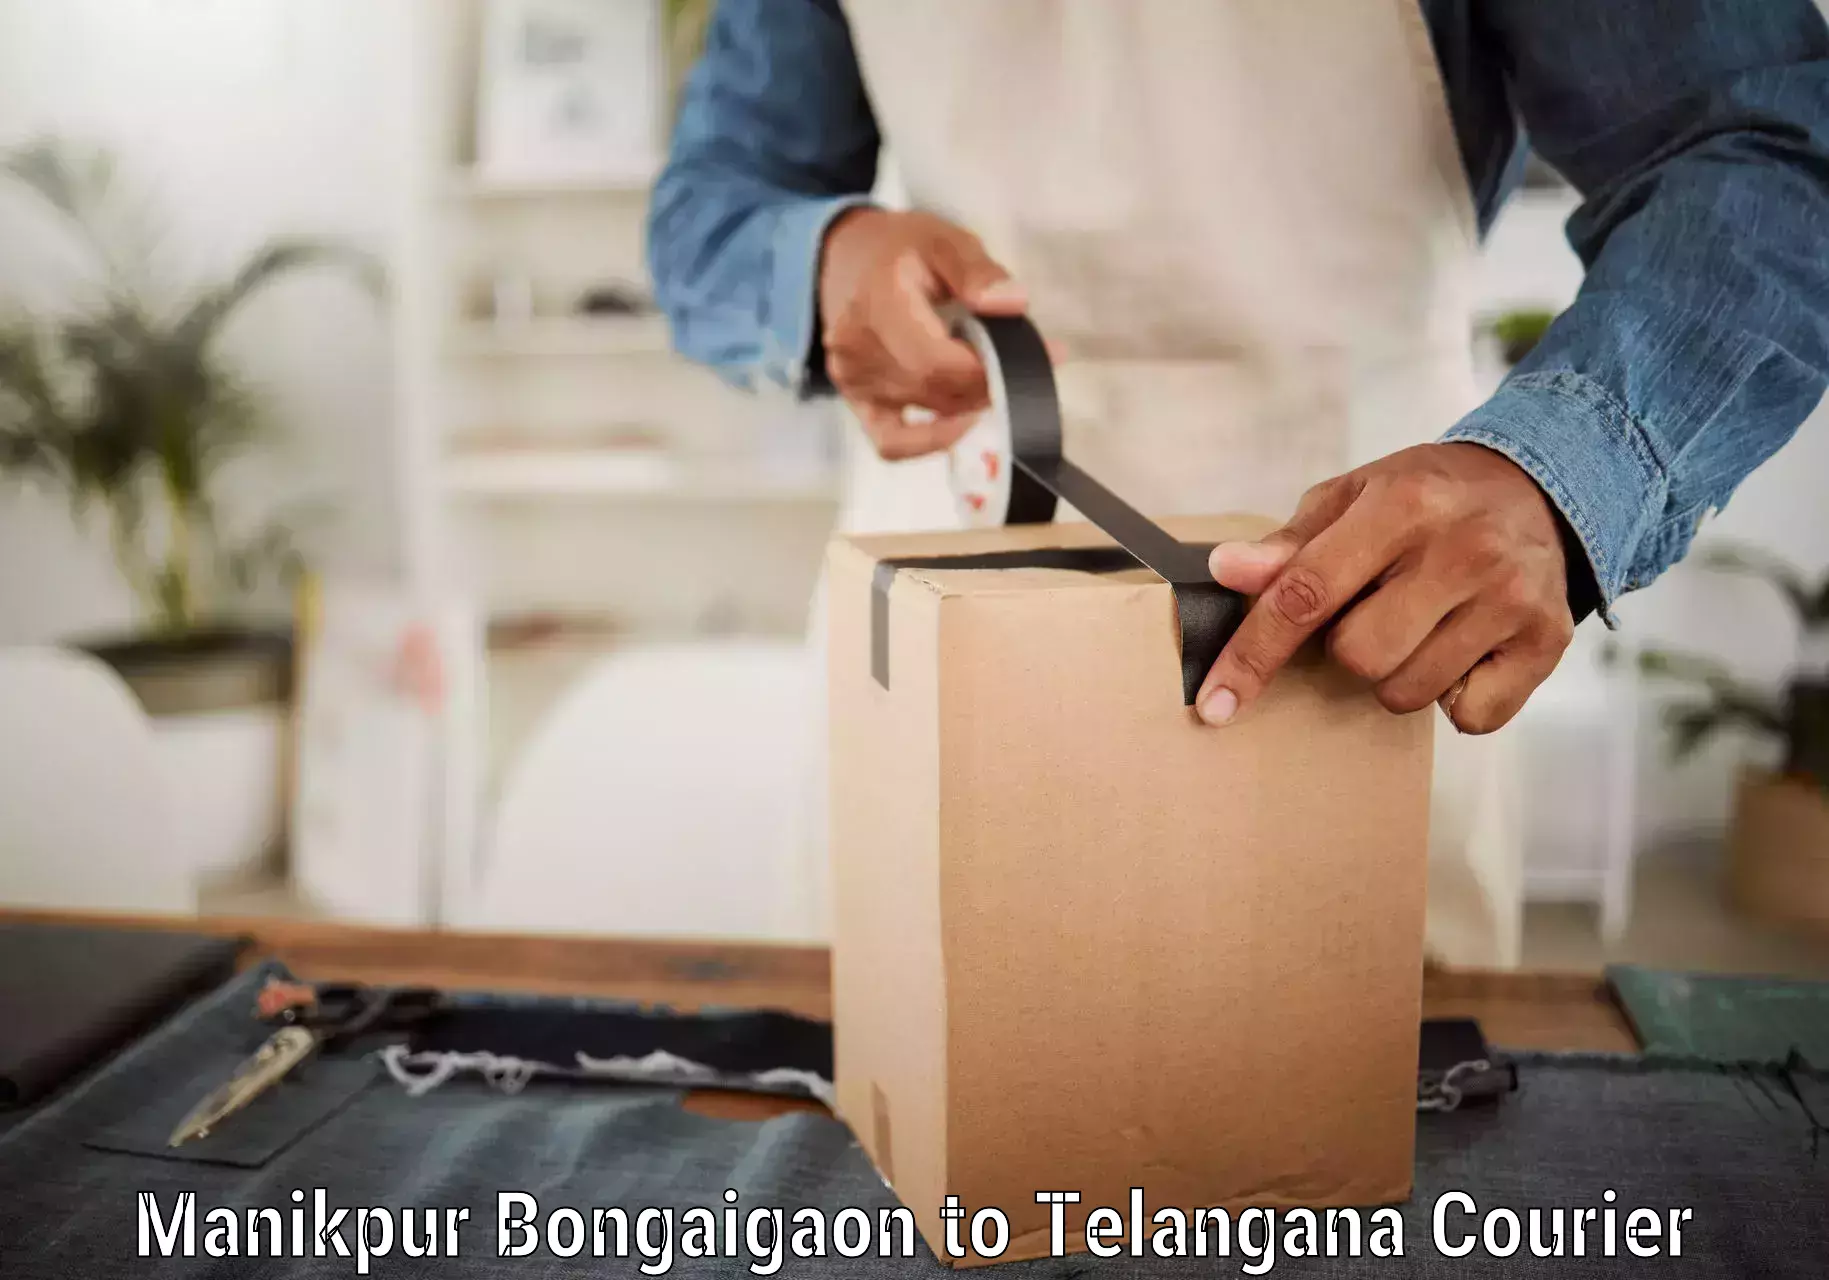 Professional courier handling Manikpur Bongaigaon to Ichoda